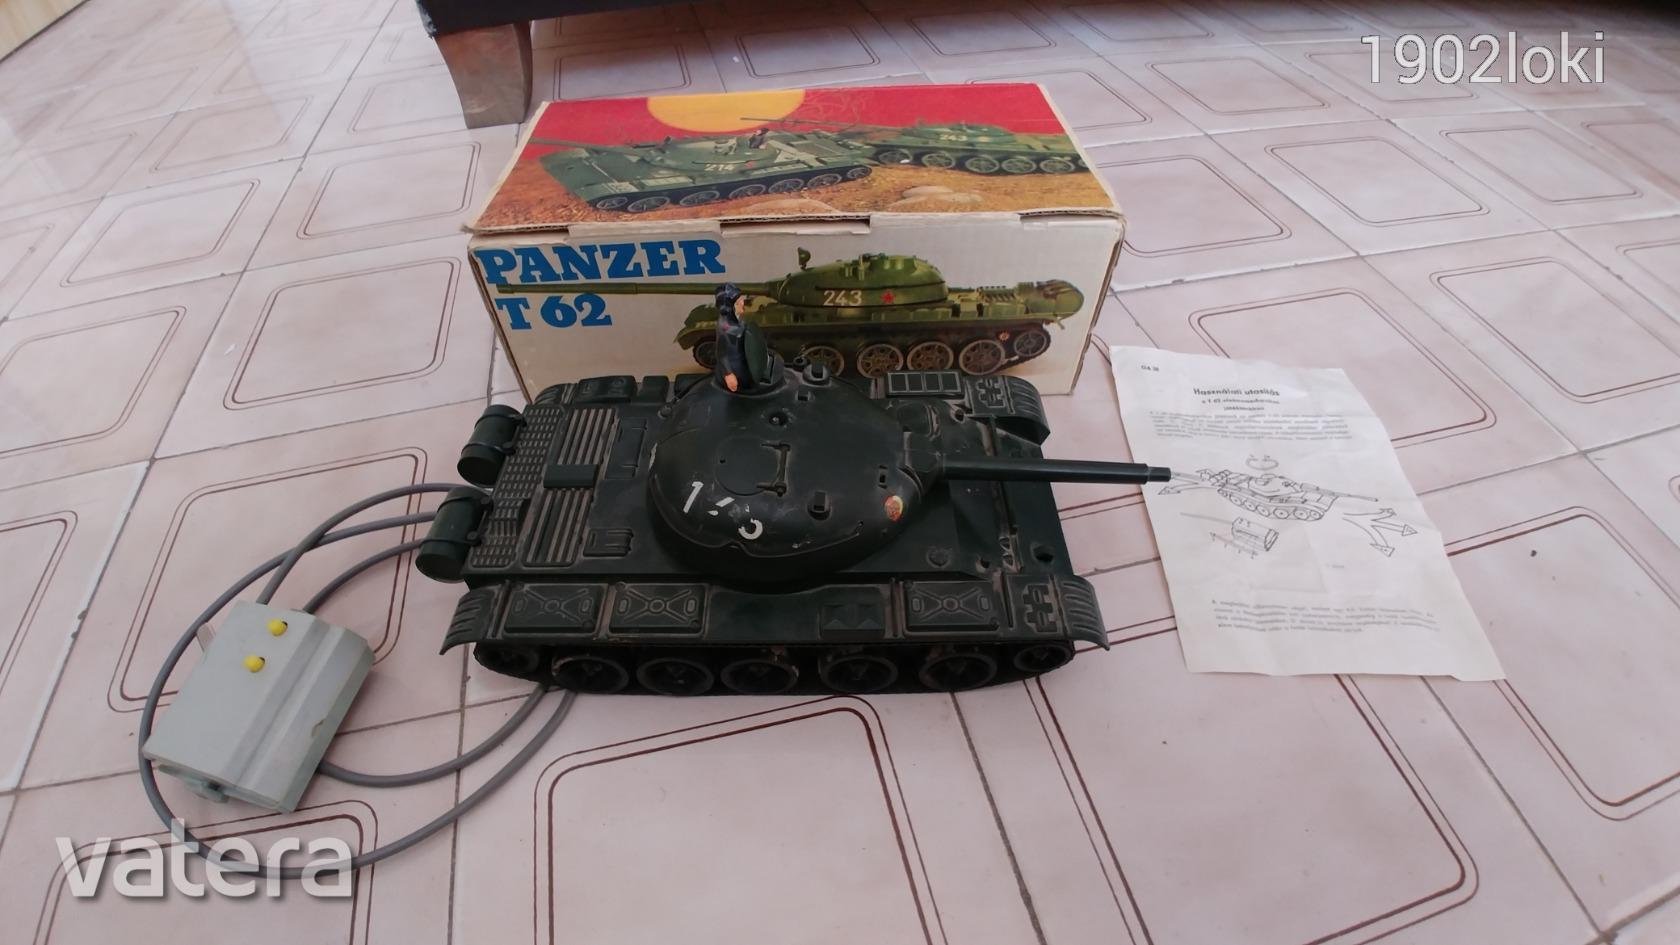 retro-piko-panzer-t62-tank-dobozaval-1ft-rol-nma-5dca_1_big.jpg